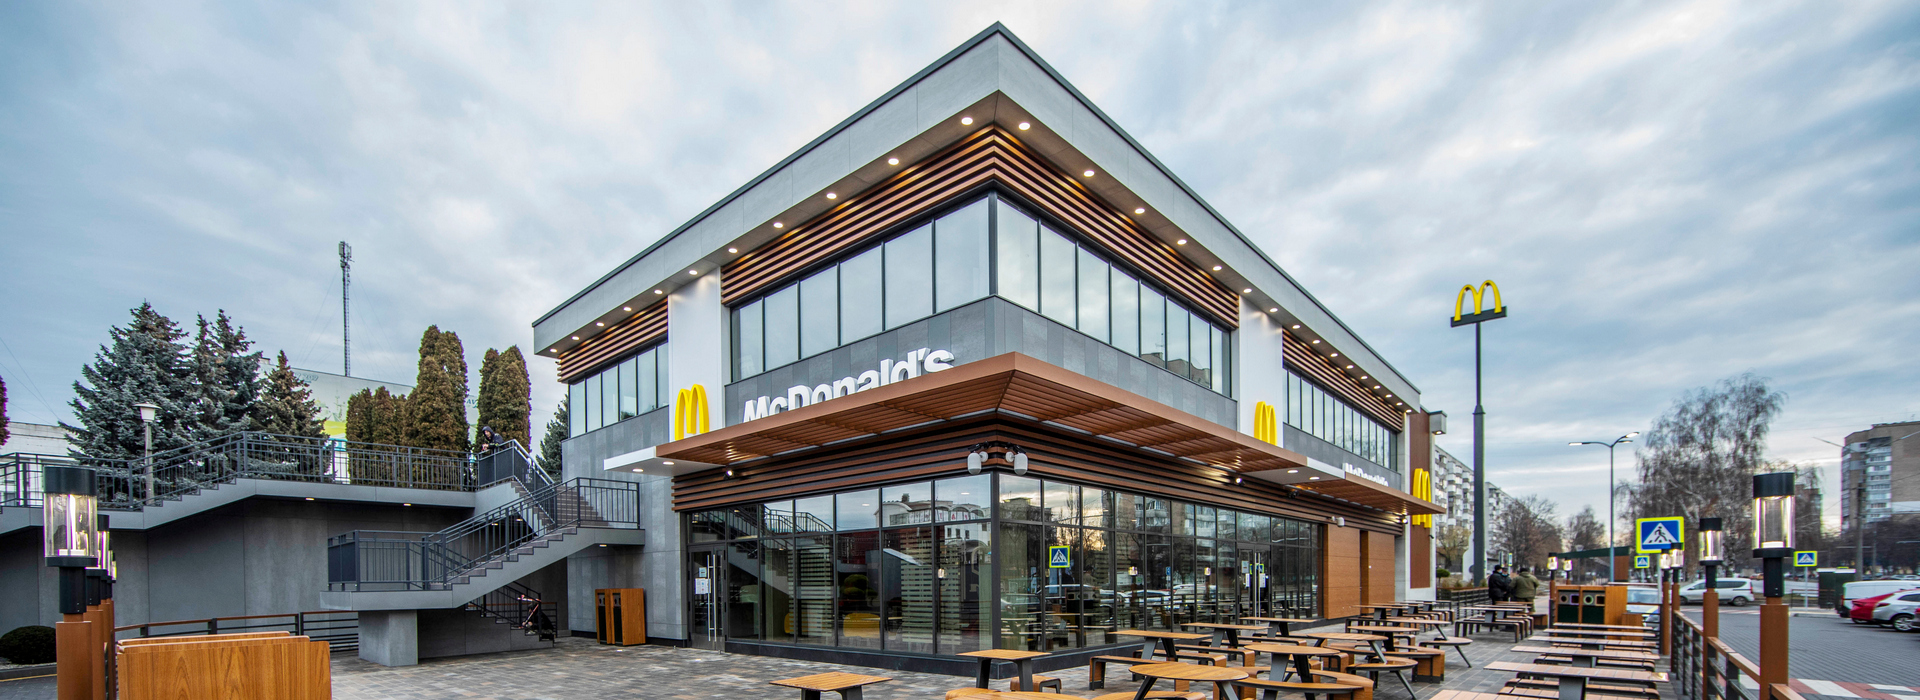 The First McDonald’s Restaurant Has Opened in Bila Tserkva